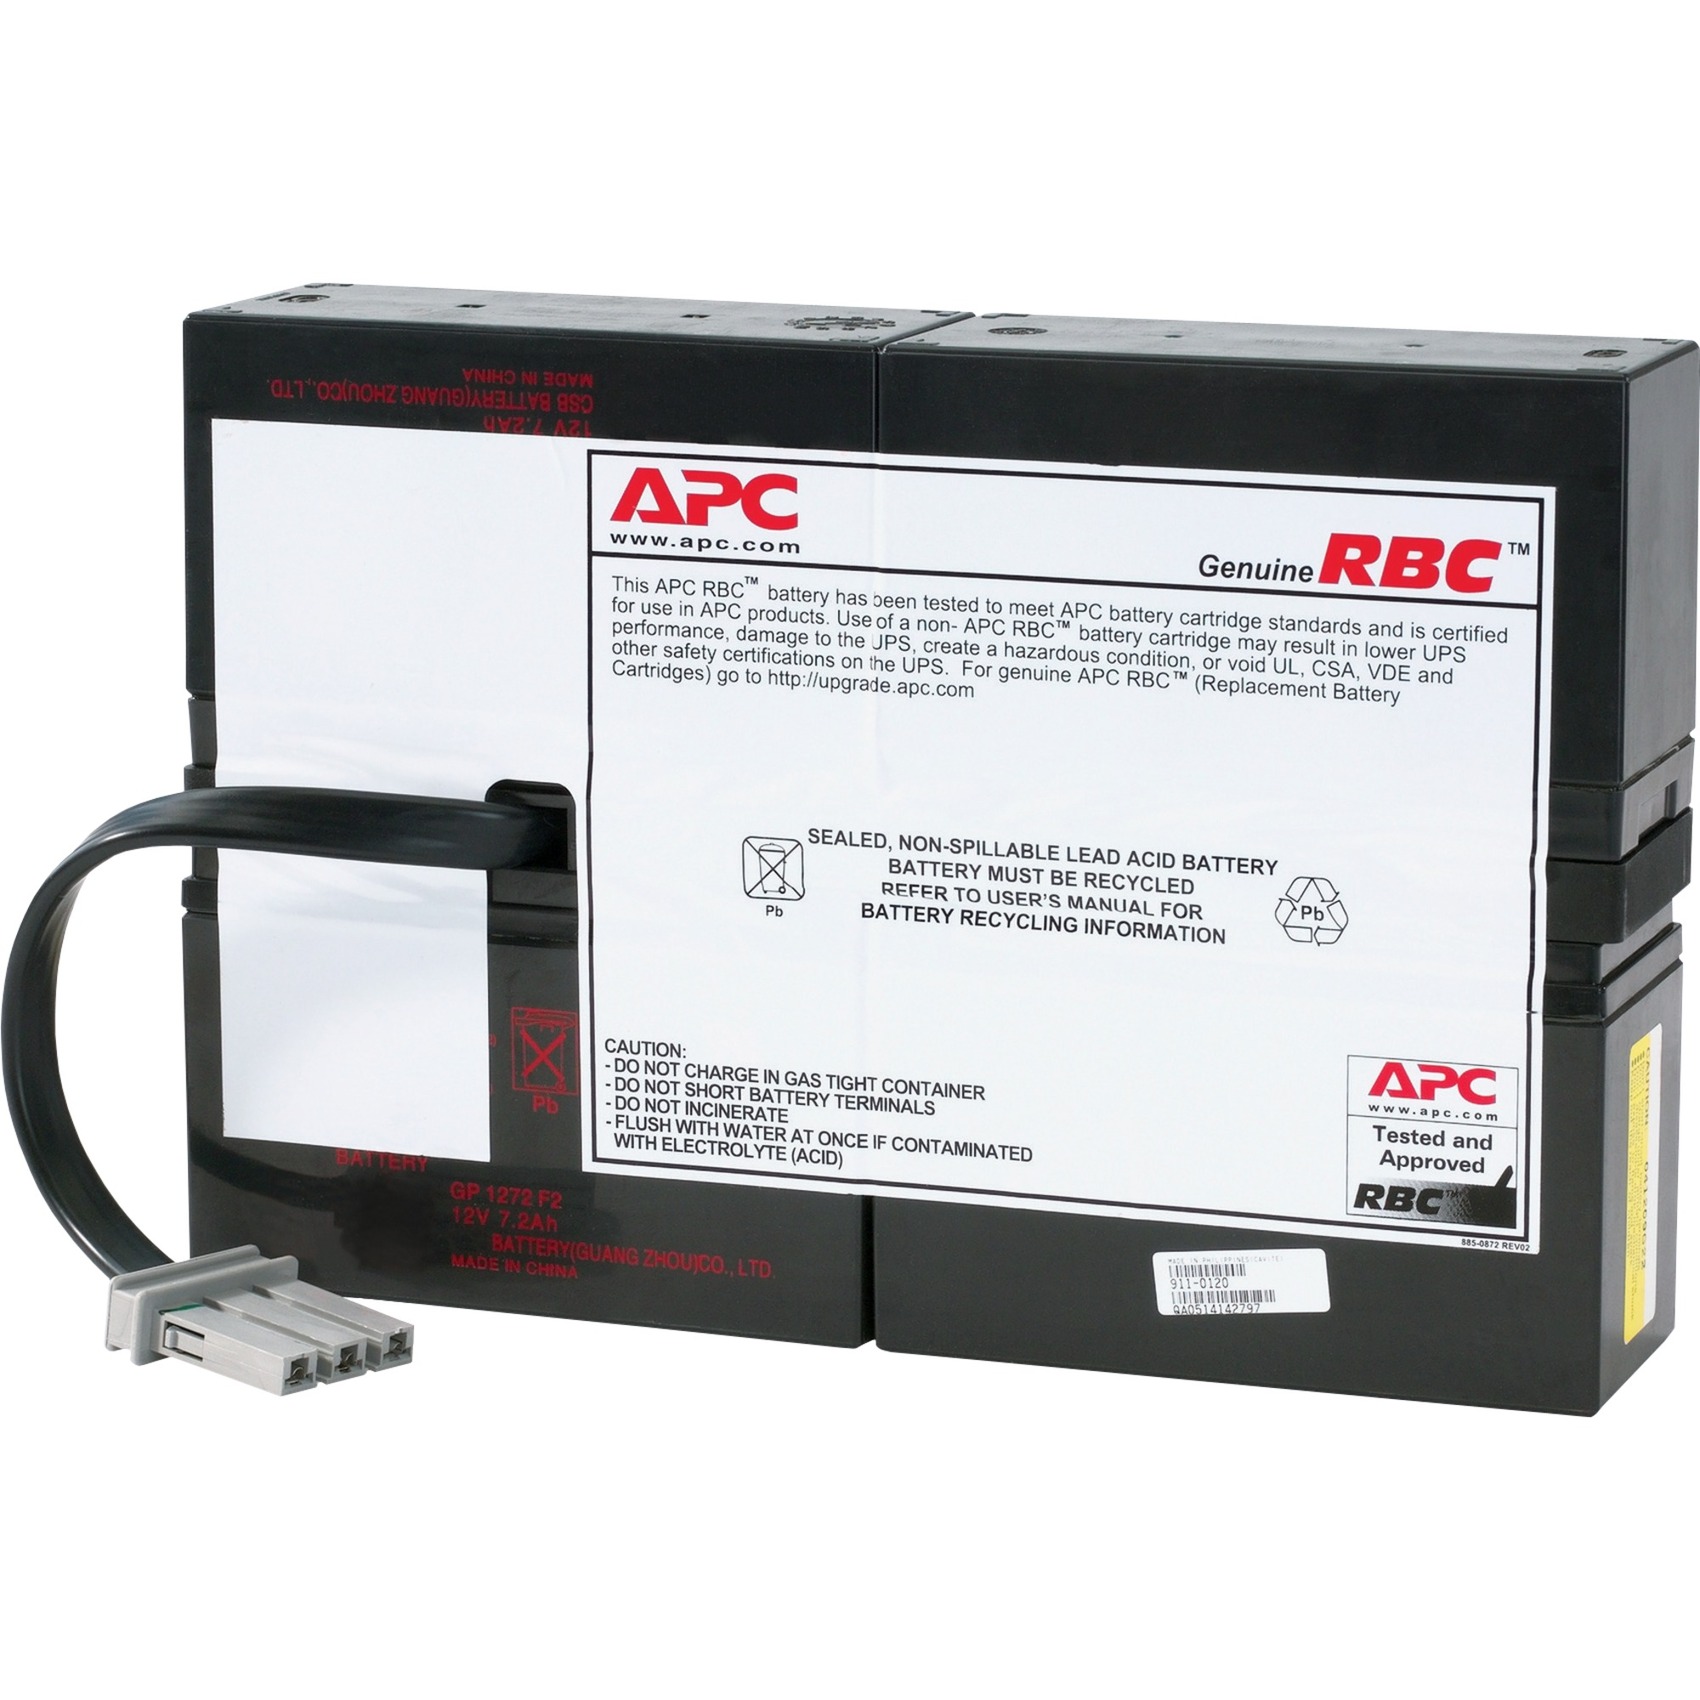 Batterie RBC59 von APC